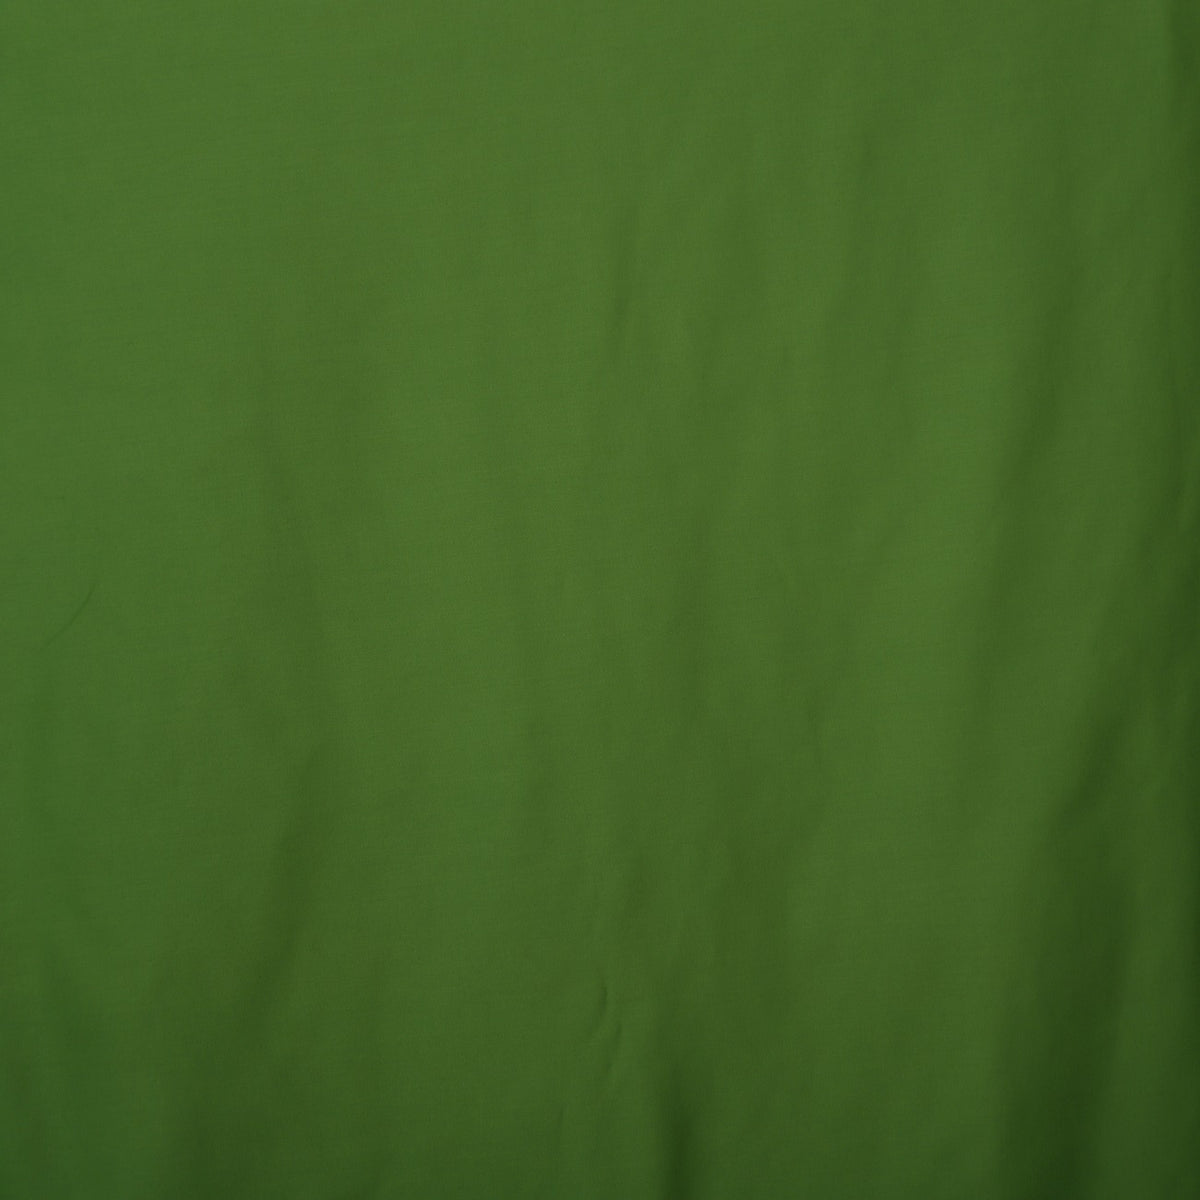 Night curtain green soft